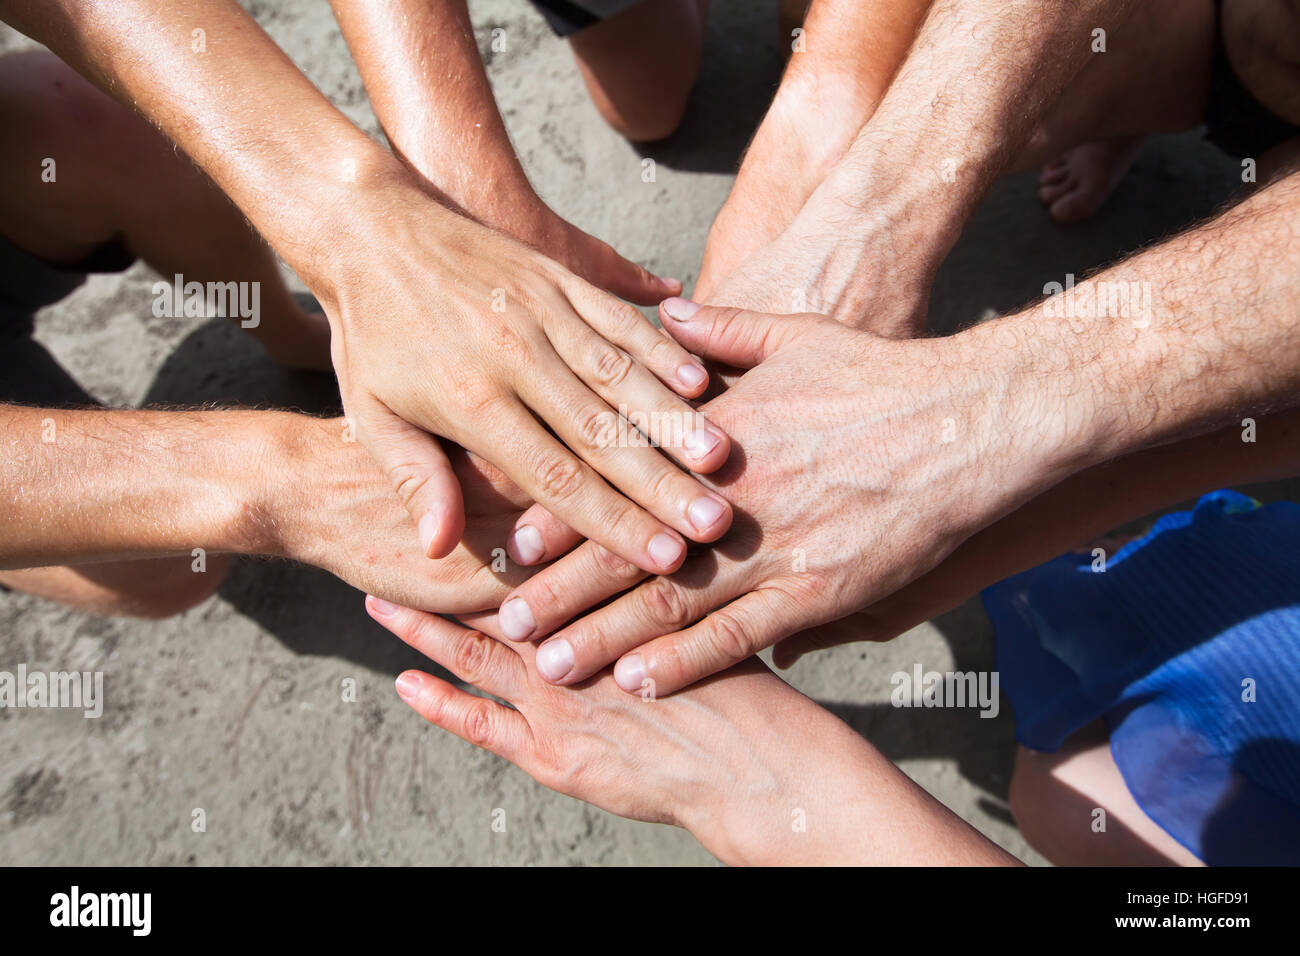 volunteering or teamwork concept, team gathering hands together Stock Photo